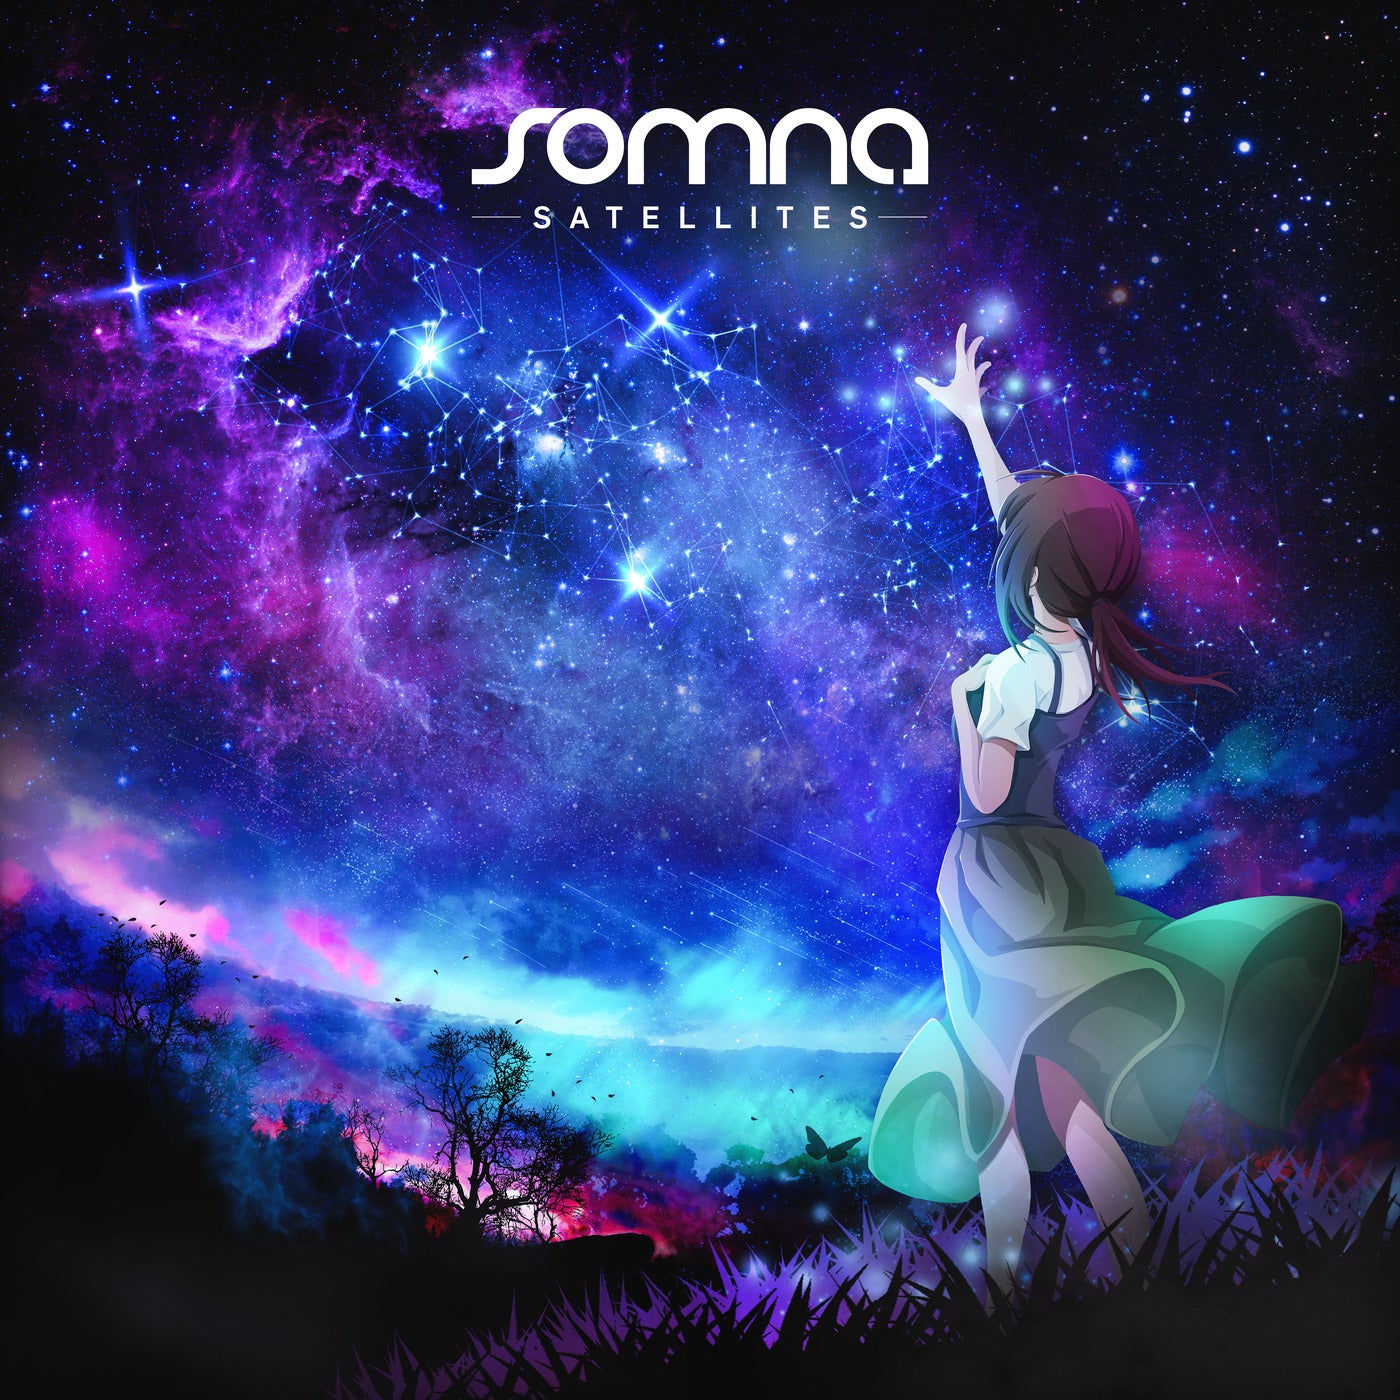 Somna 'Satellites' cover